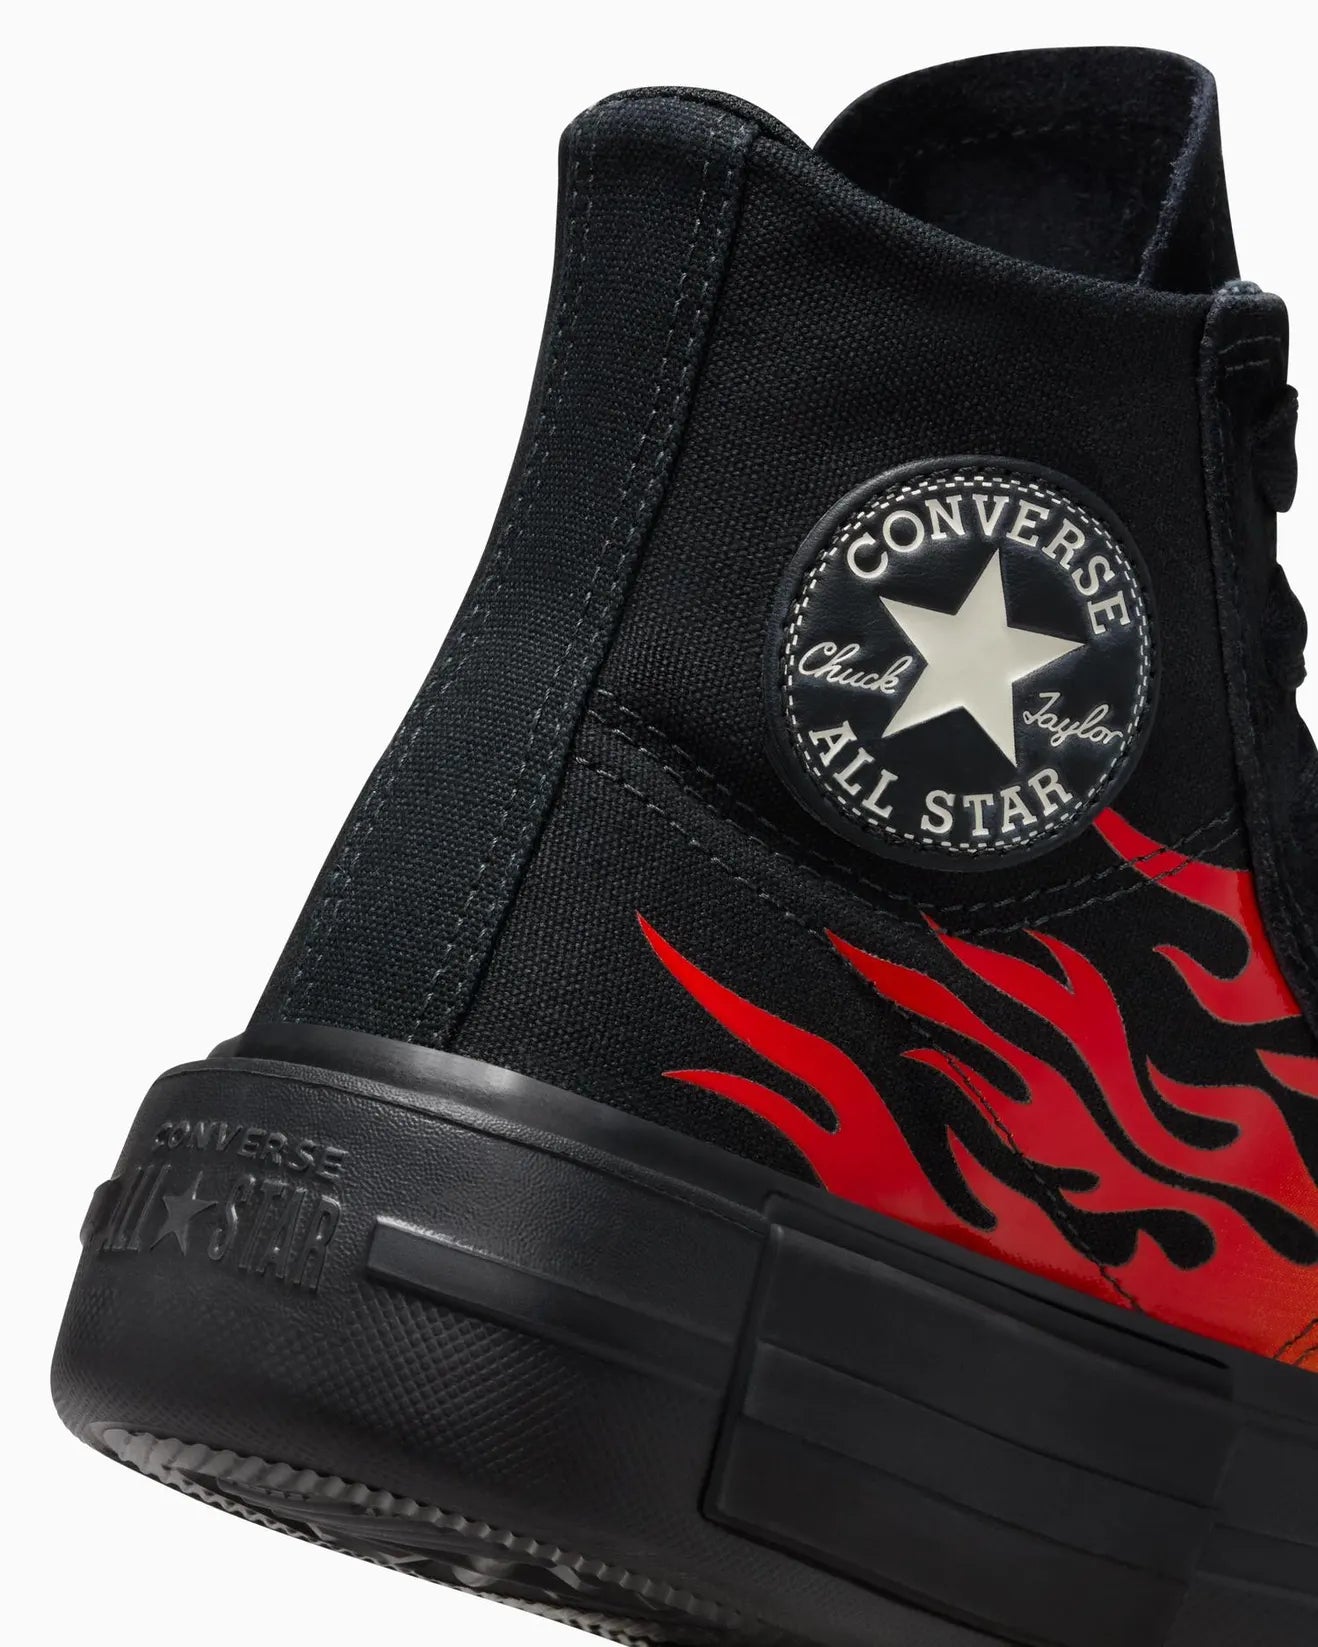 CONVERSE Chuck Taylor All Star Cruise Flames Hi Shoe - Black/Enamel Red/Black